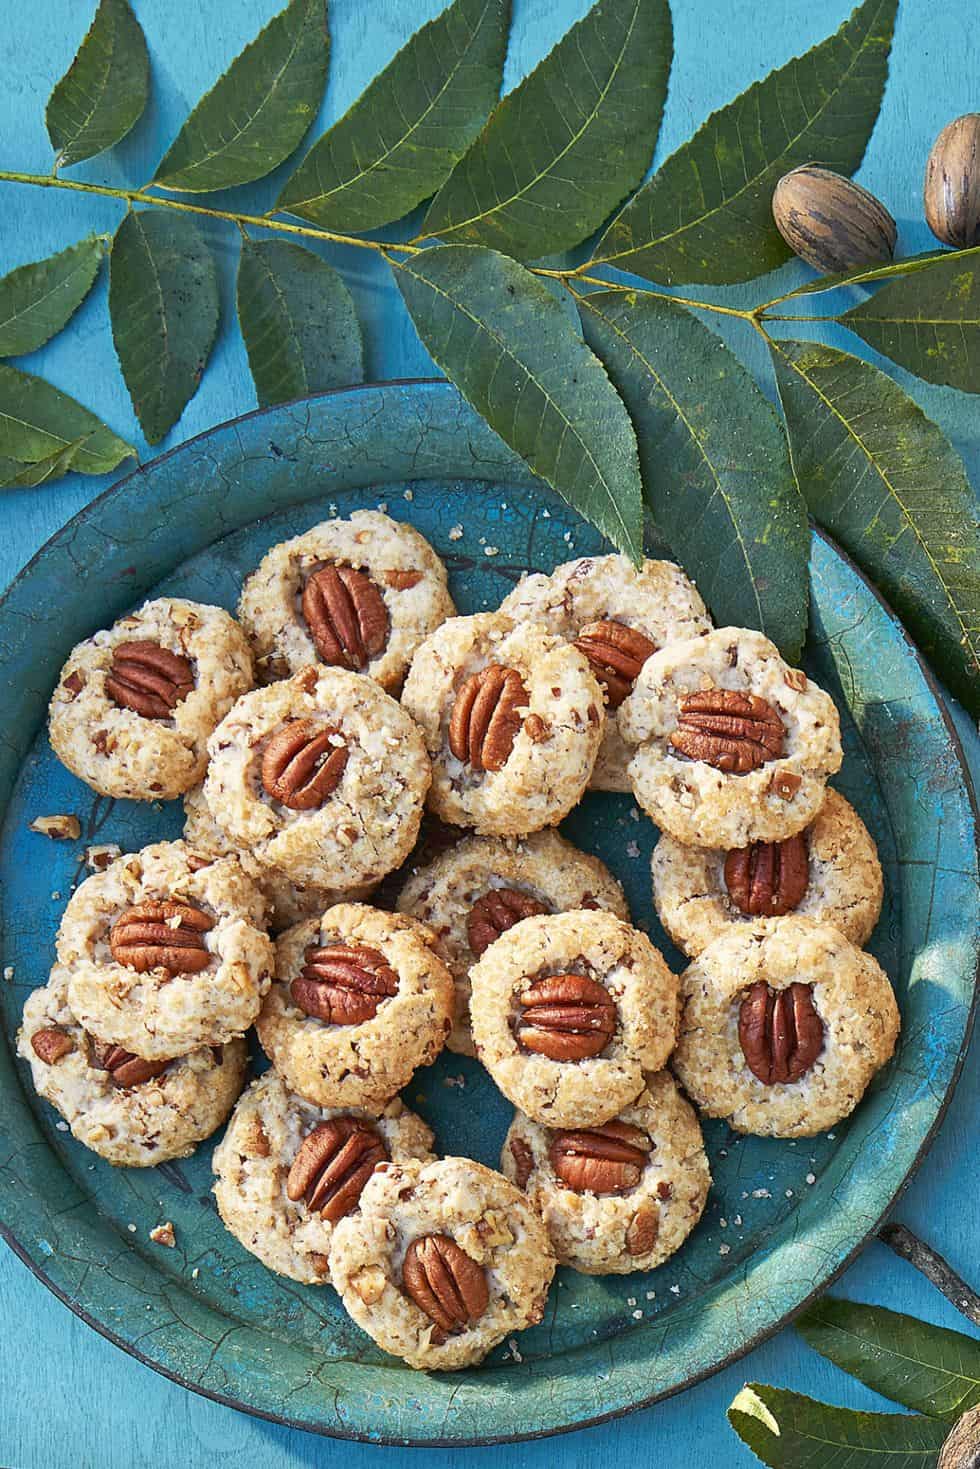 Pecan shortbread cookies 15 Scrumptious Cookies for Fall Recipes